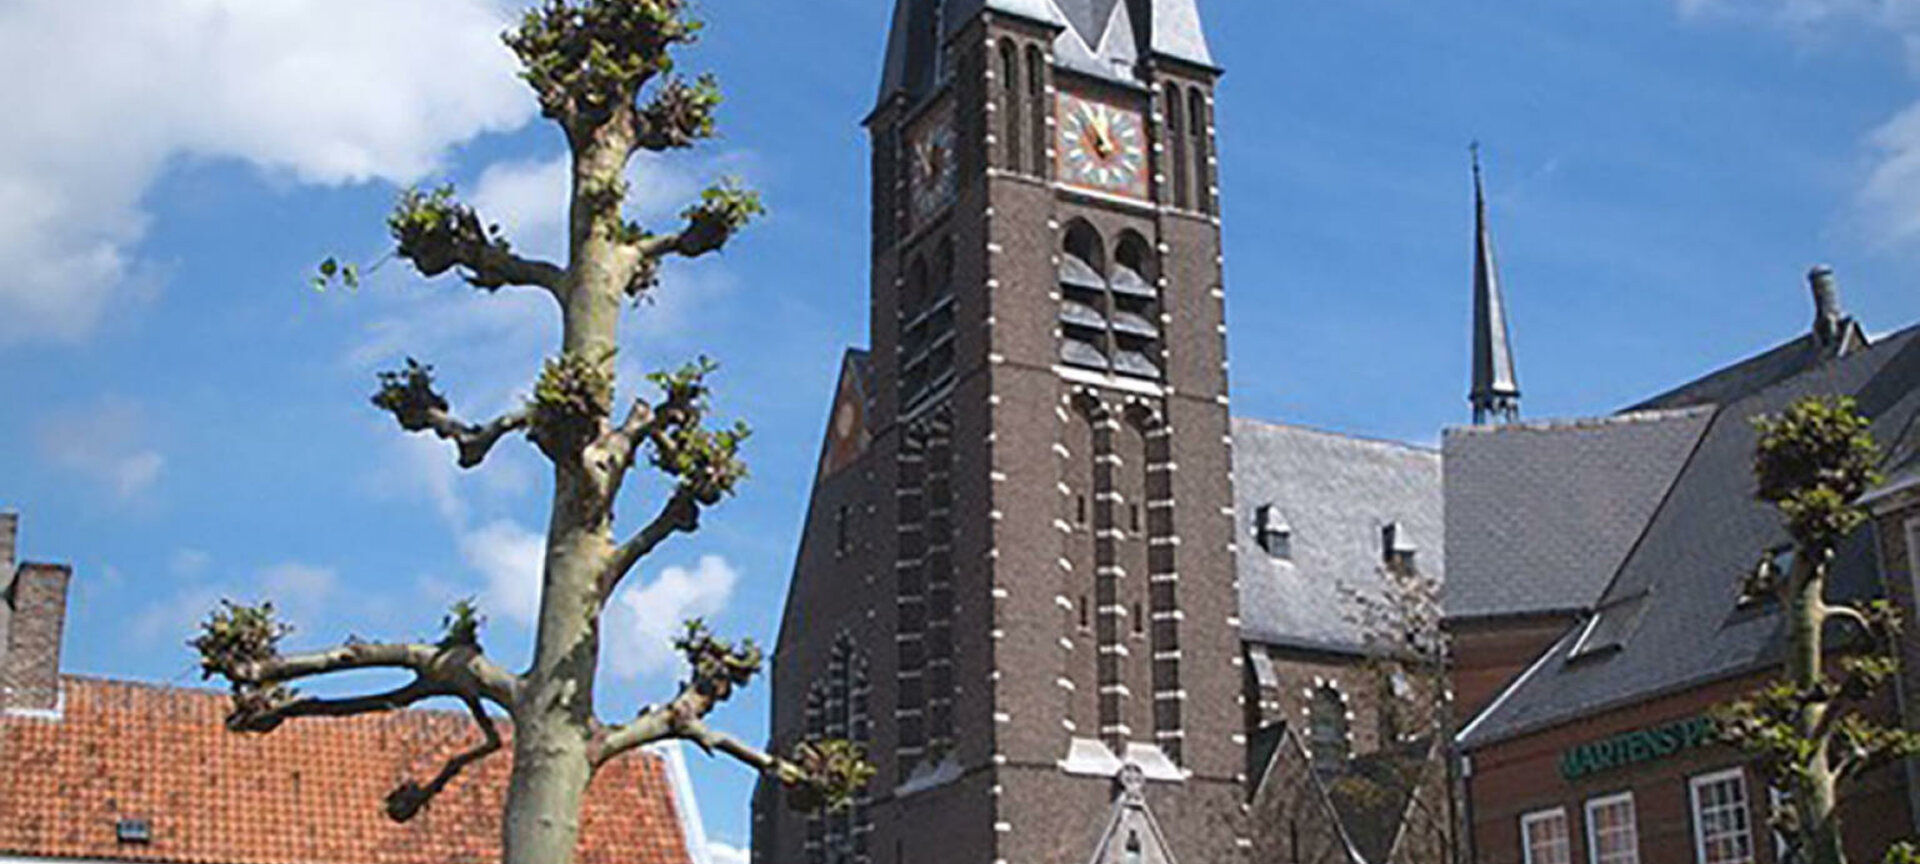 Sint-Laurentiuskerk - St.Laurentiuskerk